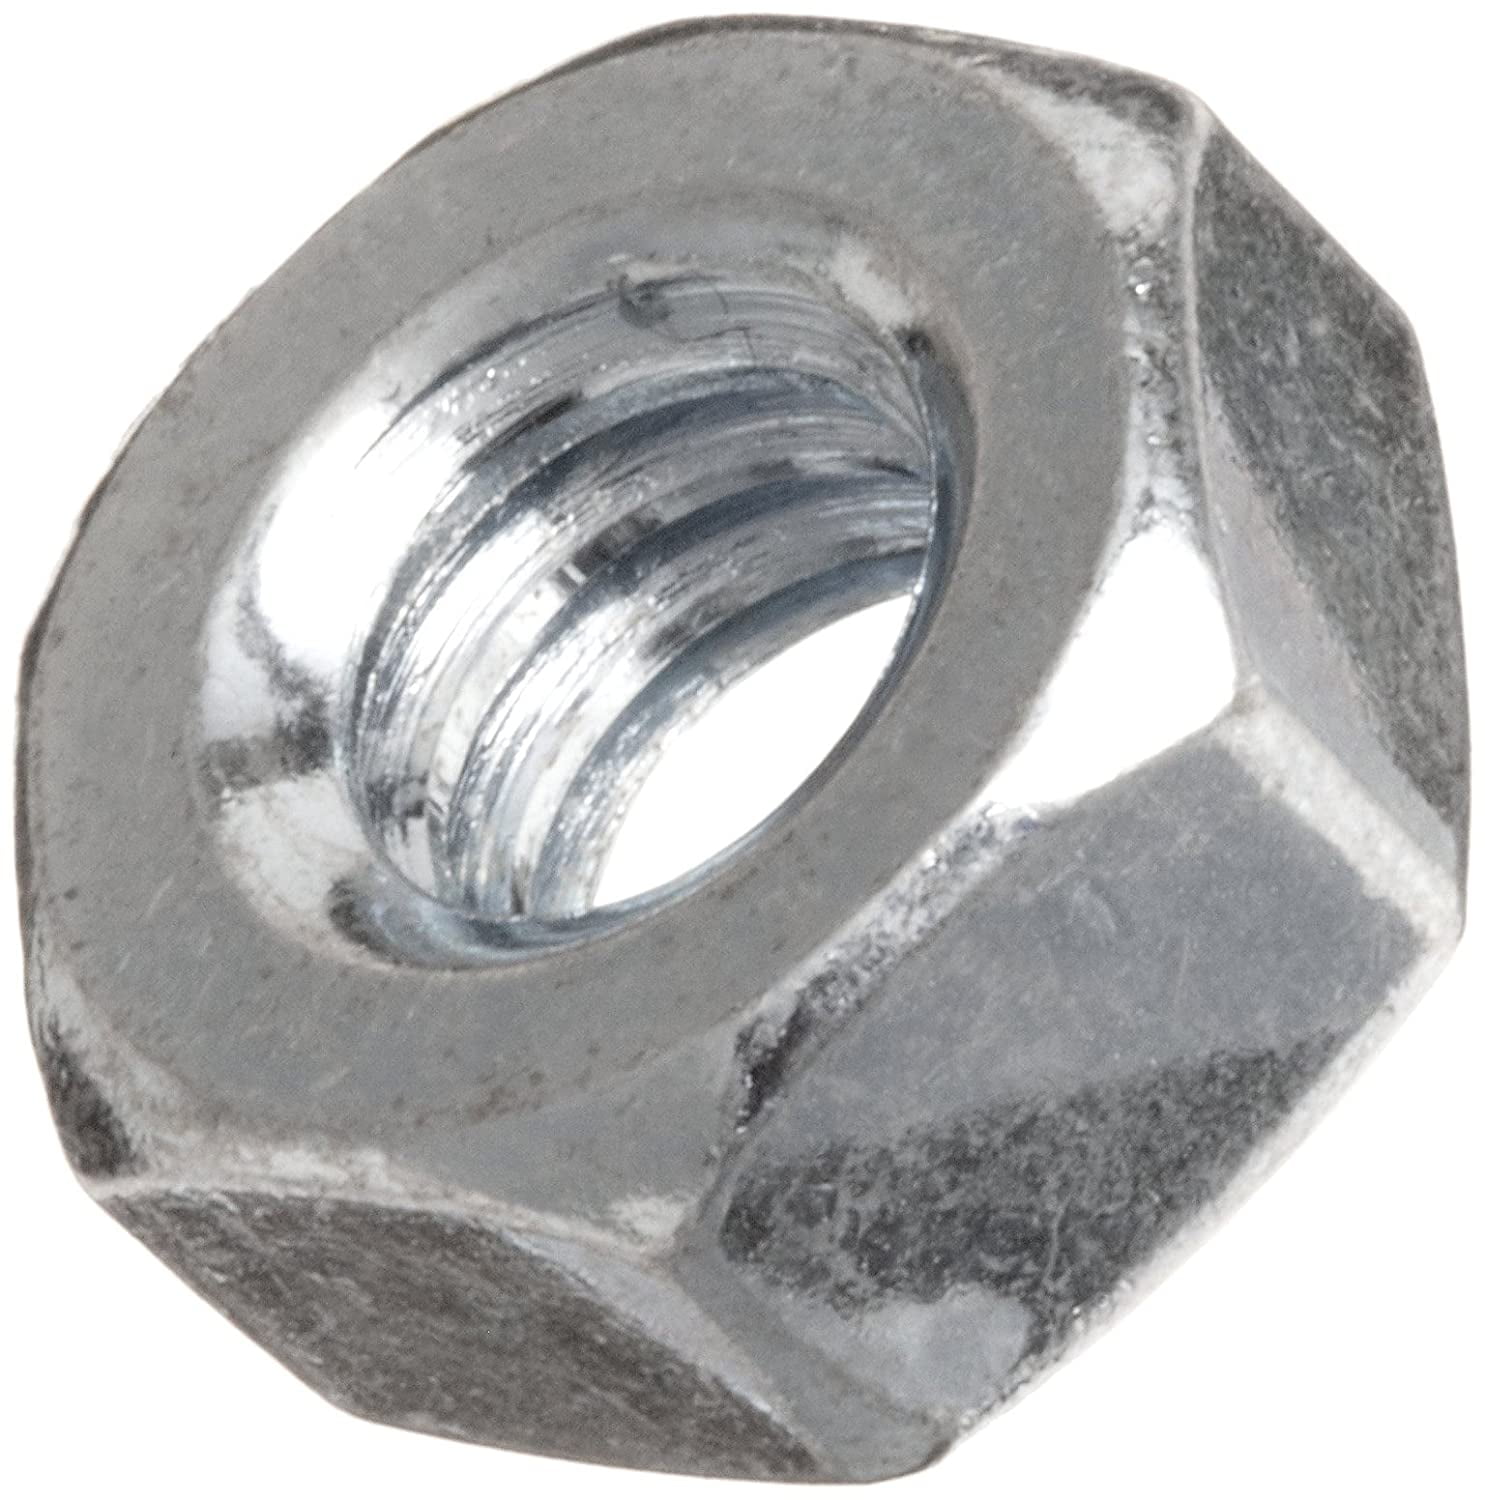 #4-40 Hex Machine Screw Nuts Steel Zinc Plated 100 